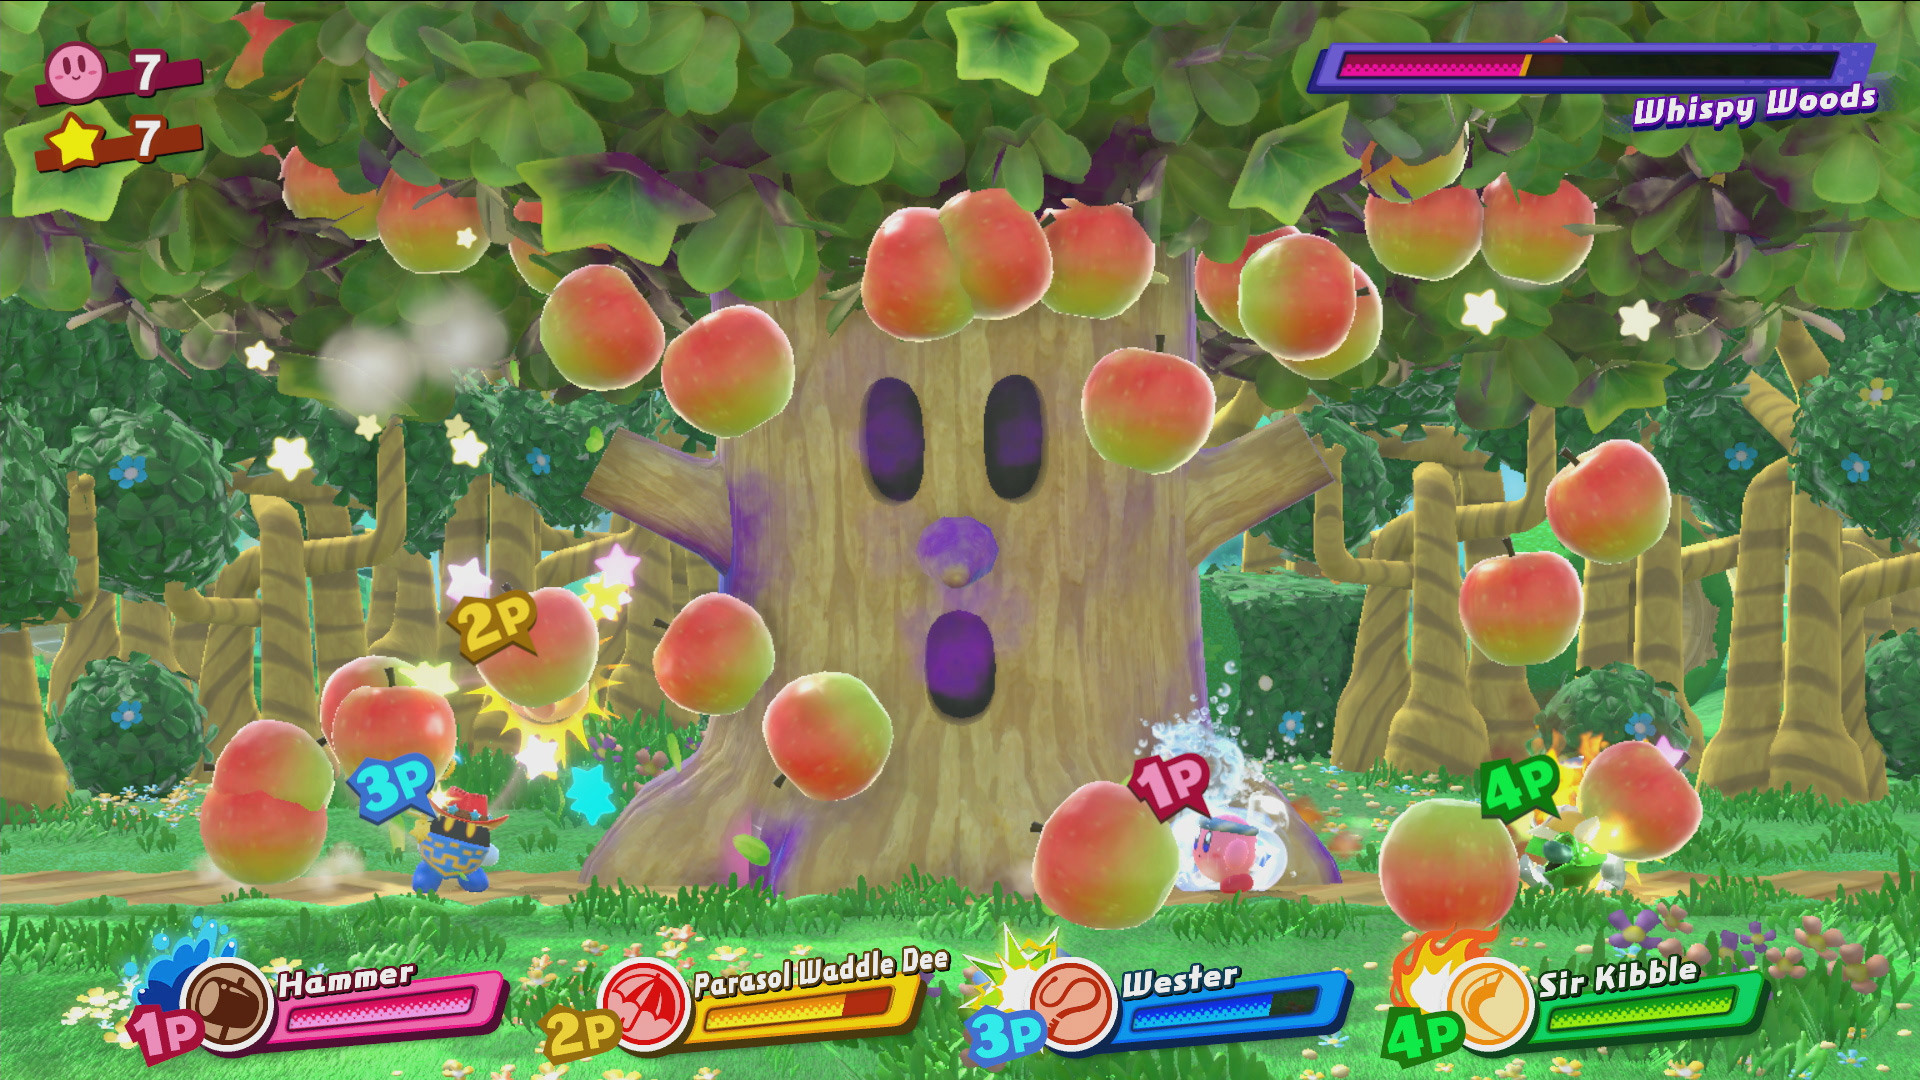 Kirby Star Allies Background